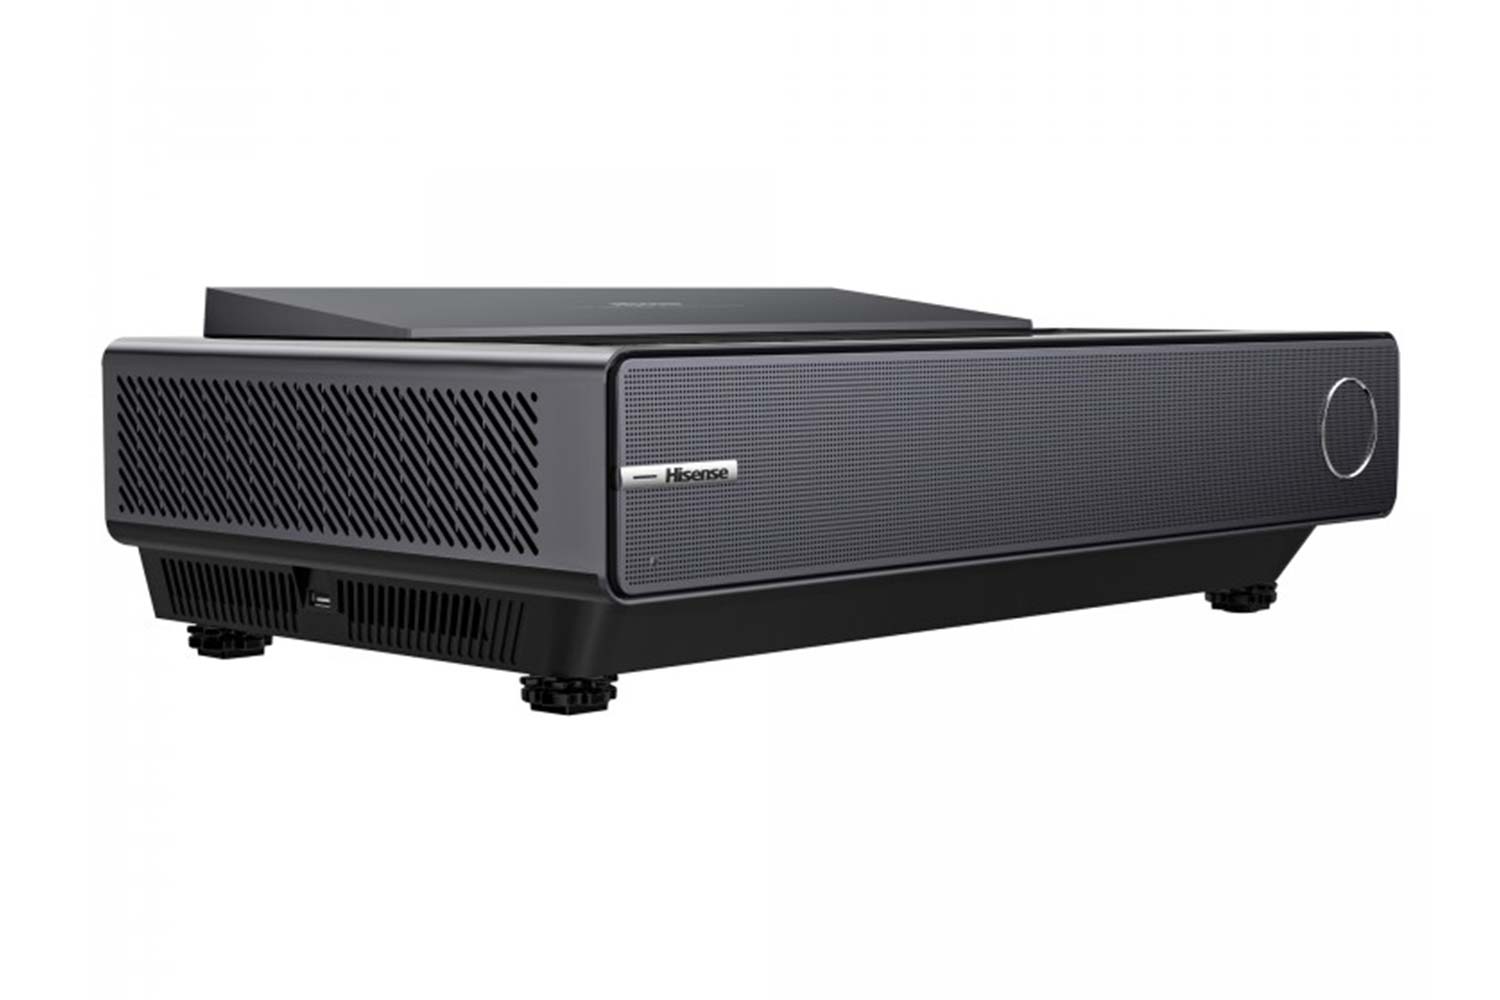 Hisense PX1-Pro TriChroma 4K Ultra HD Laser TV